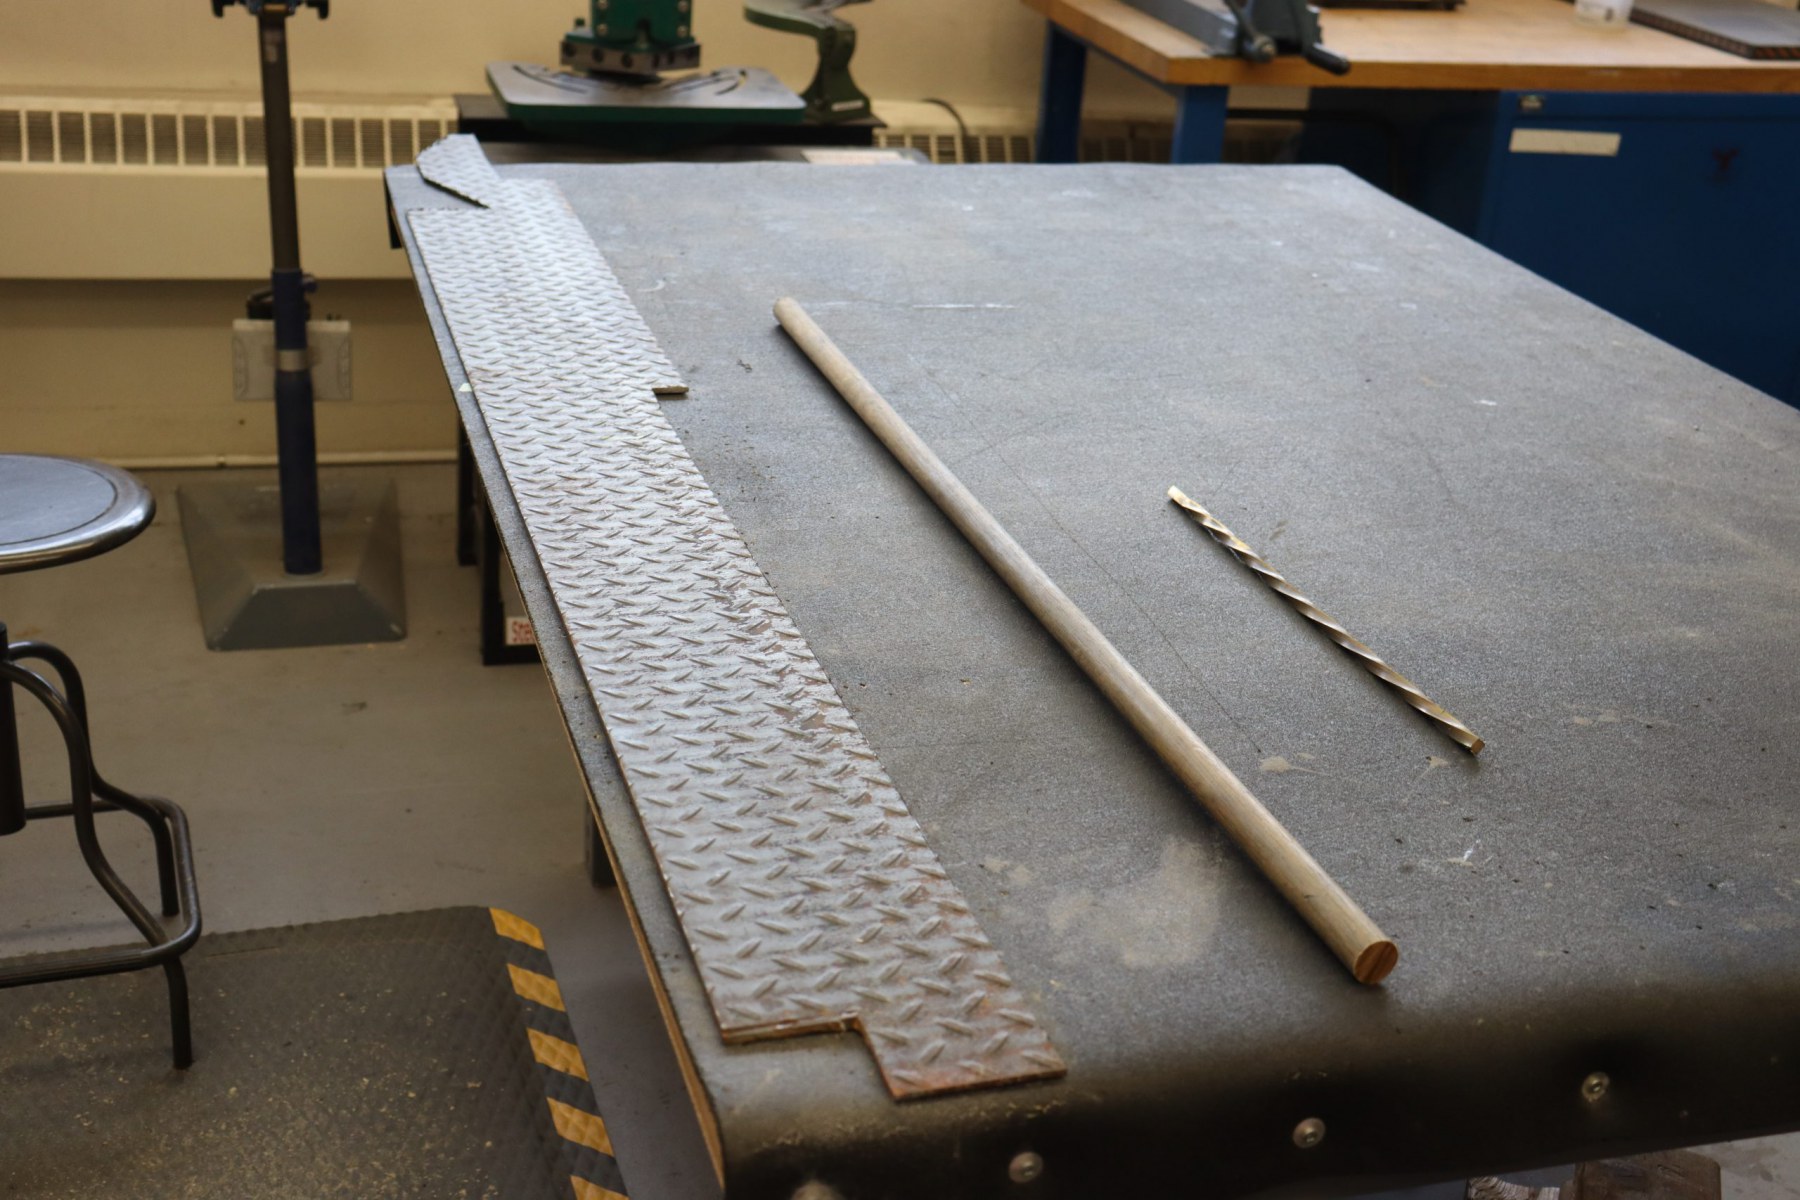 The raw materials found in Hangar 18 that helped construct the handmade sword (Caleb Hooper/Borden Citizen)